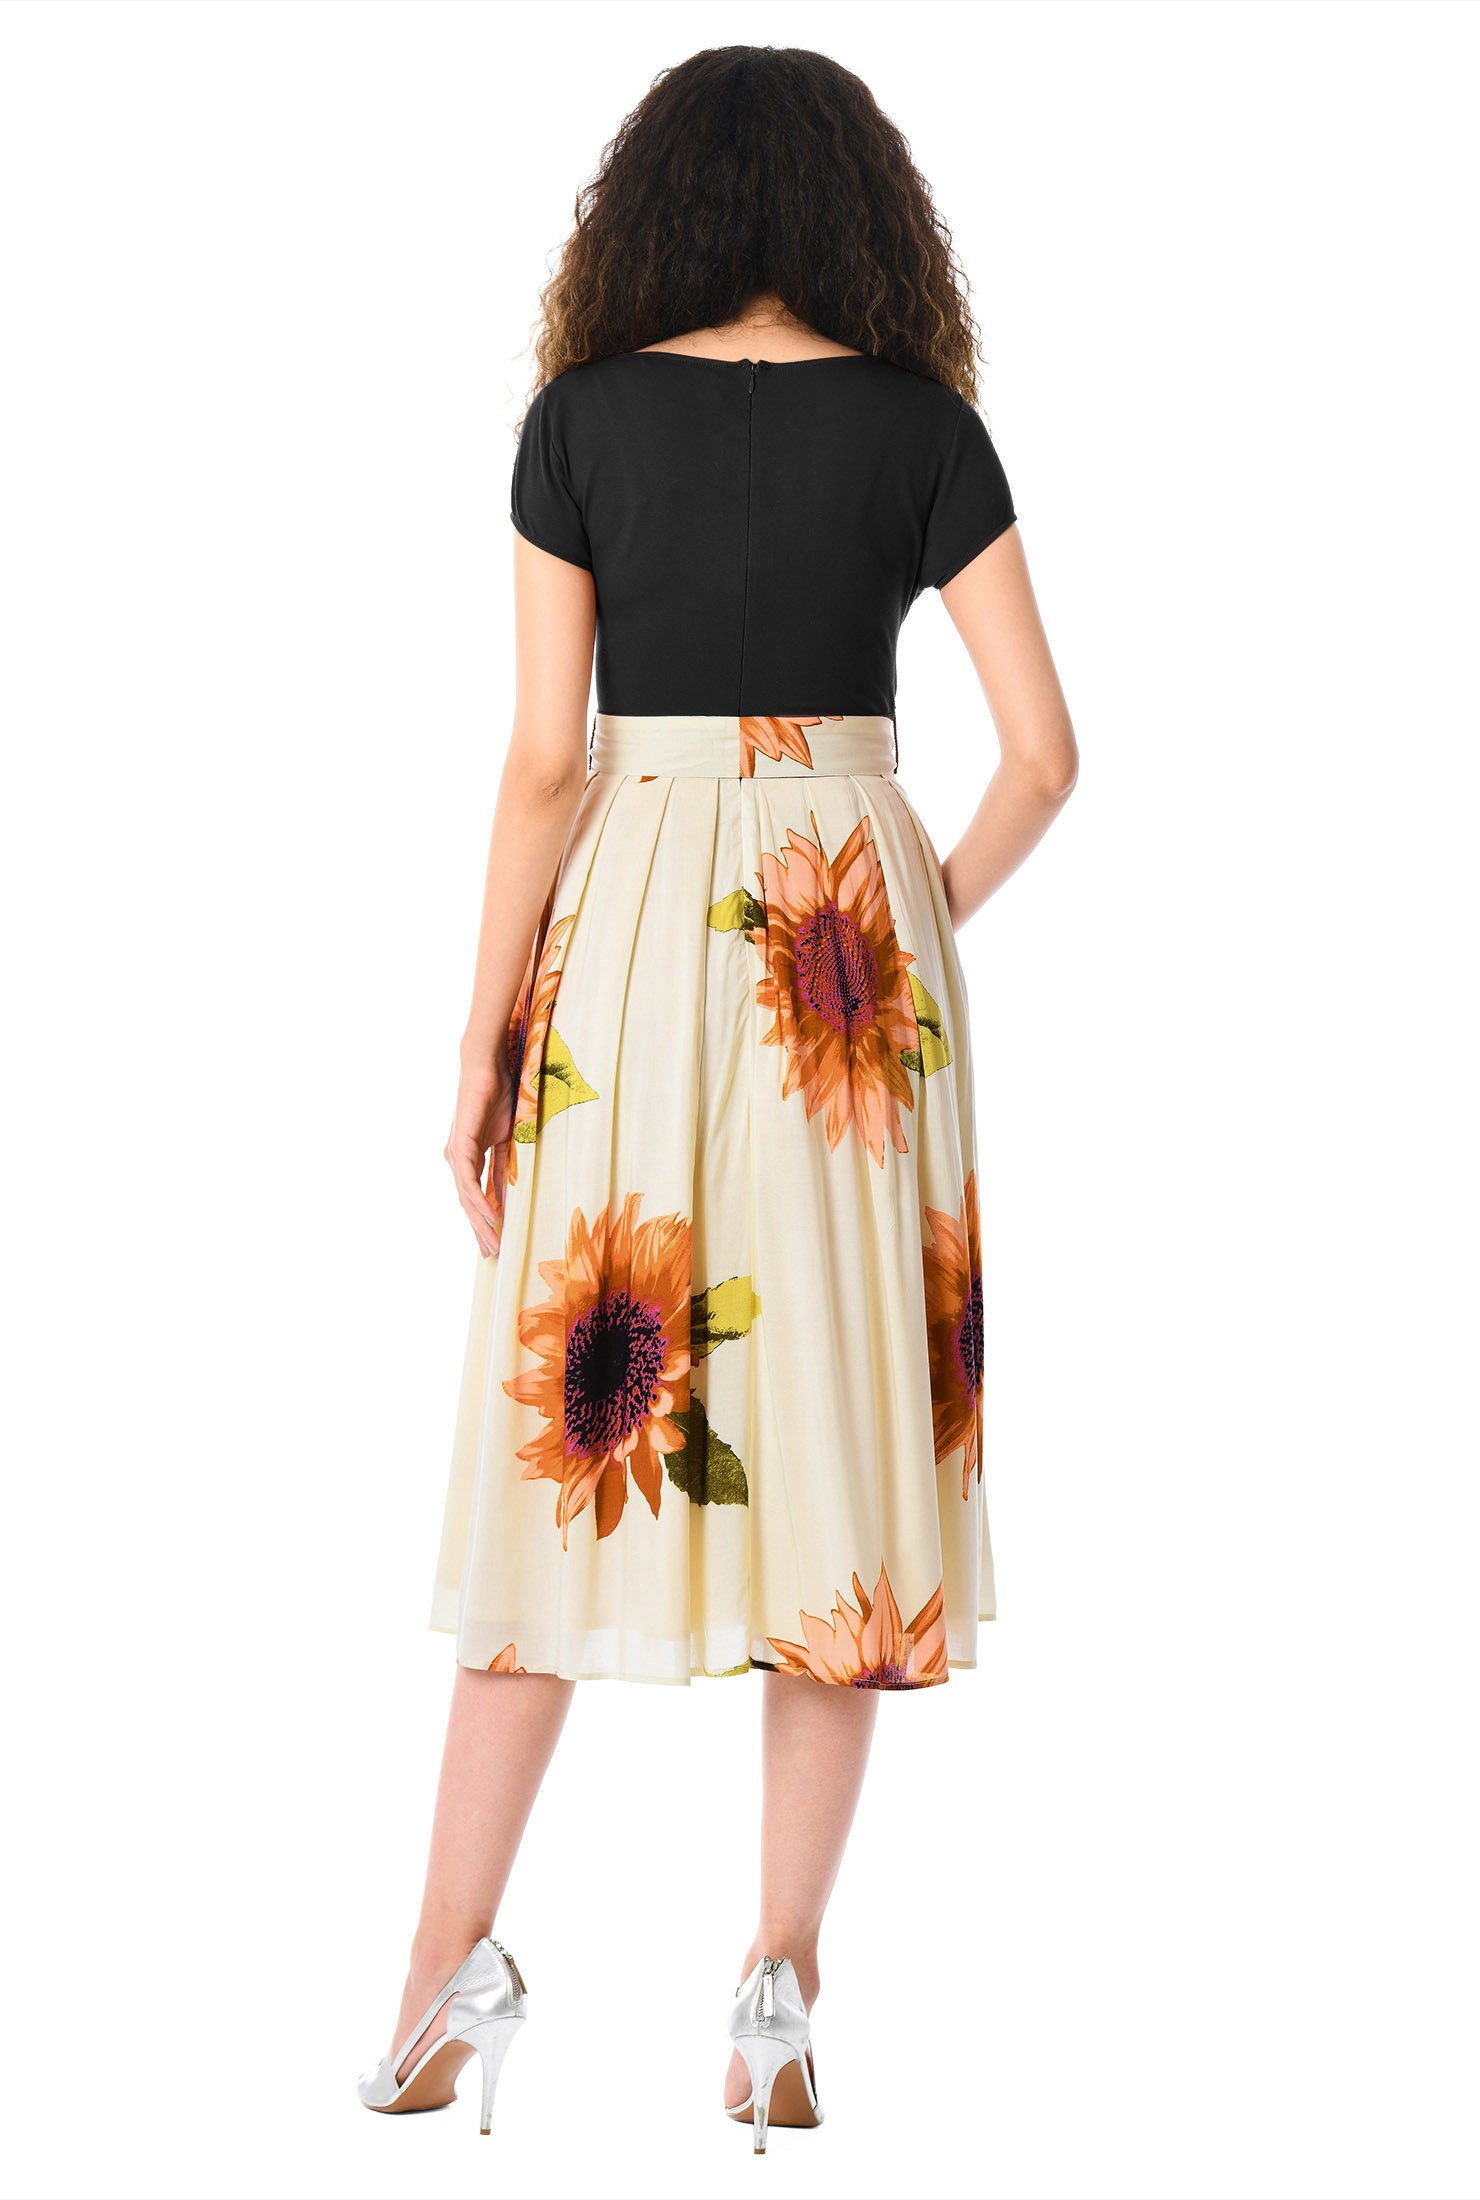 Shop Sunflower print mixed media dress | eShakti